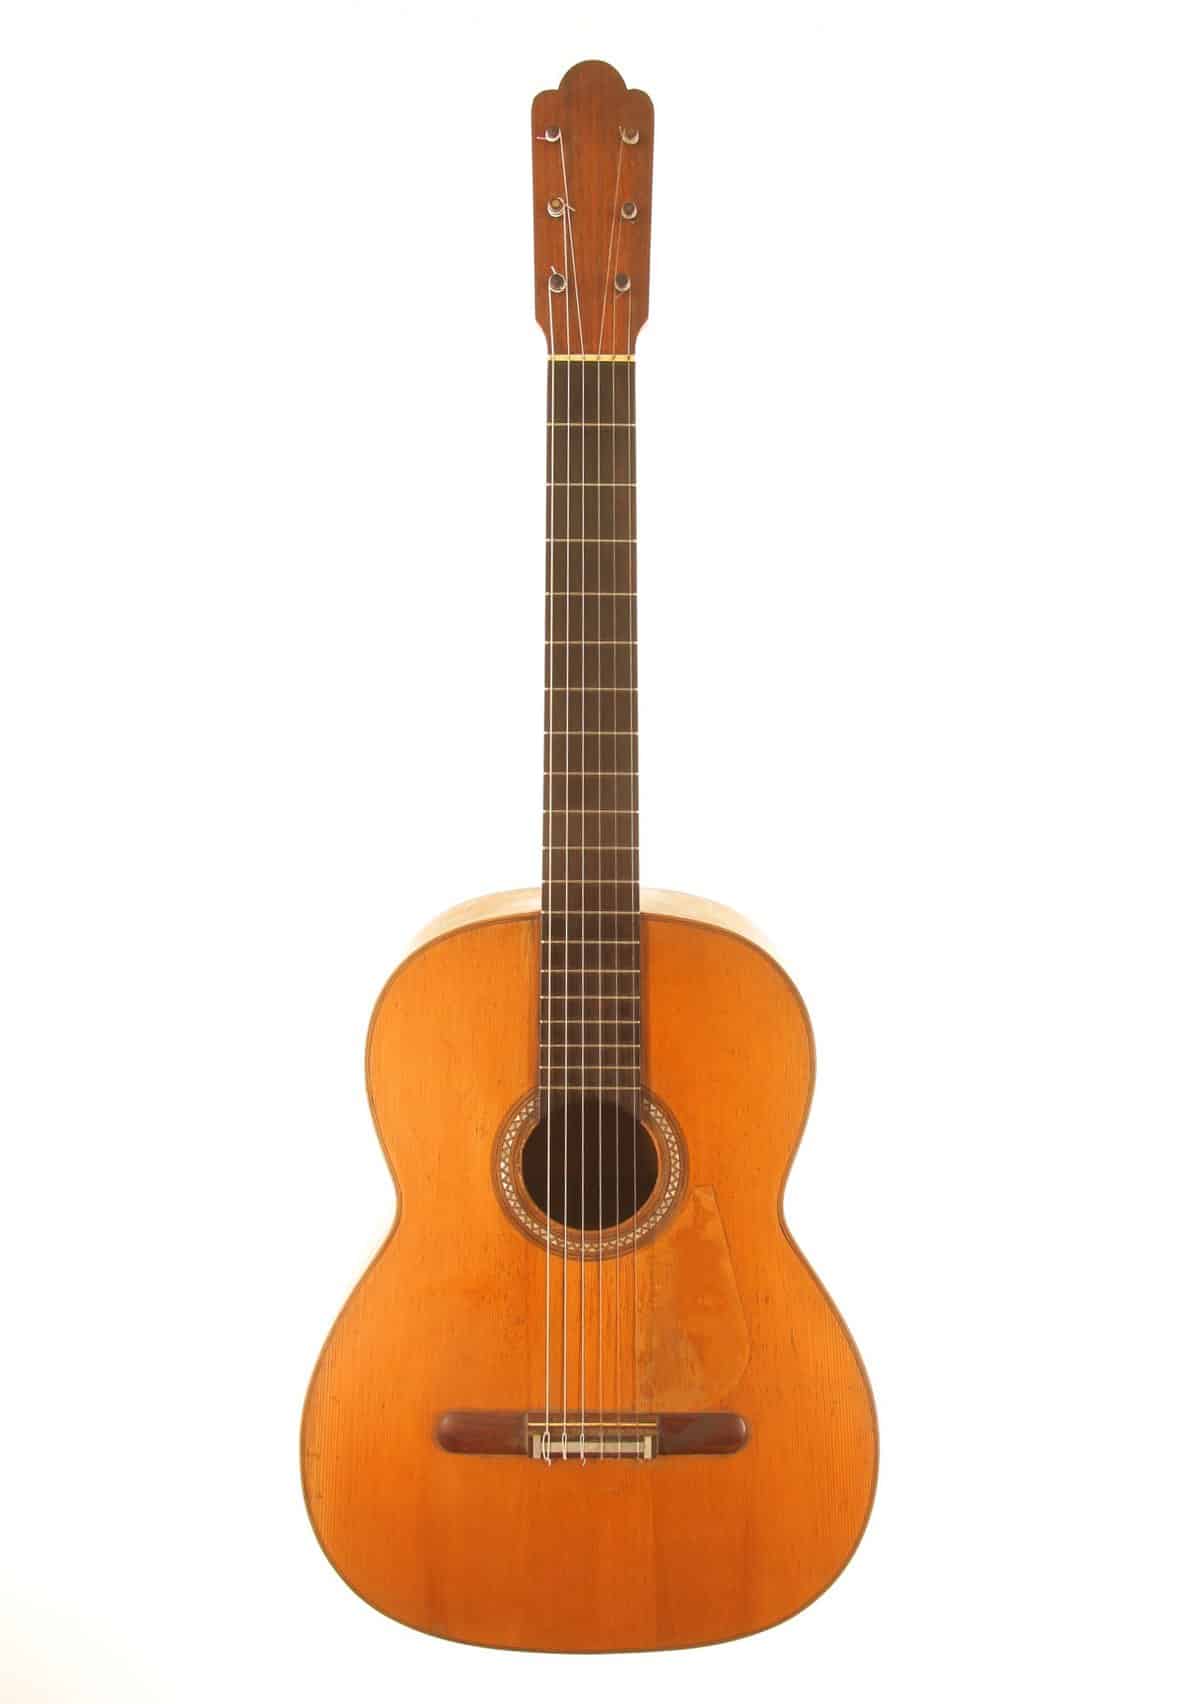 Salvador Ibanez ~1900 historical Torres style guitar - Vintage